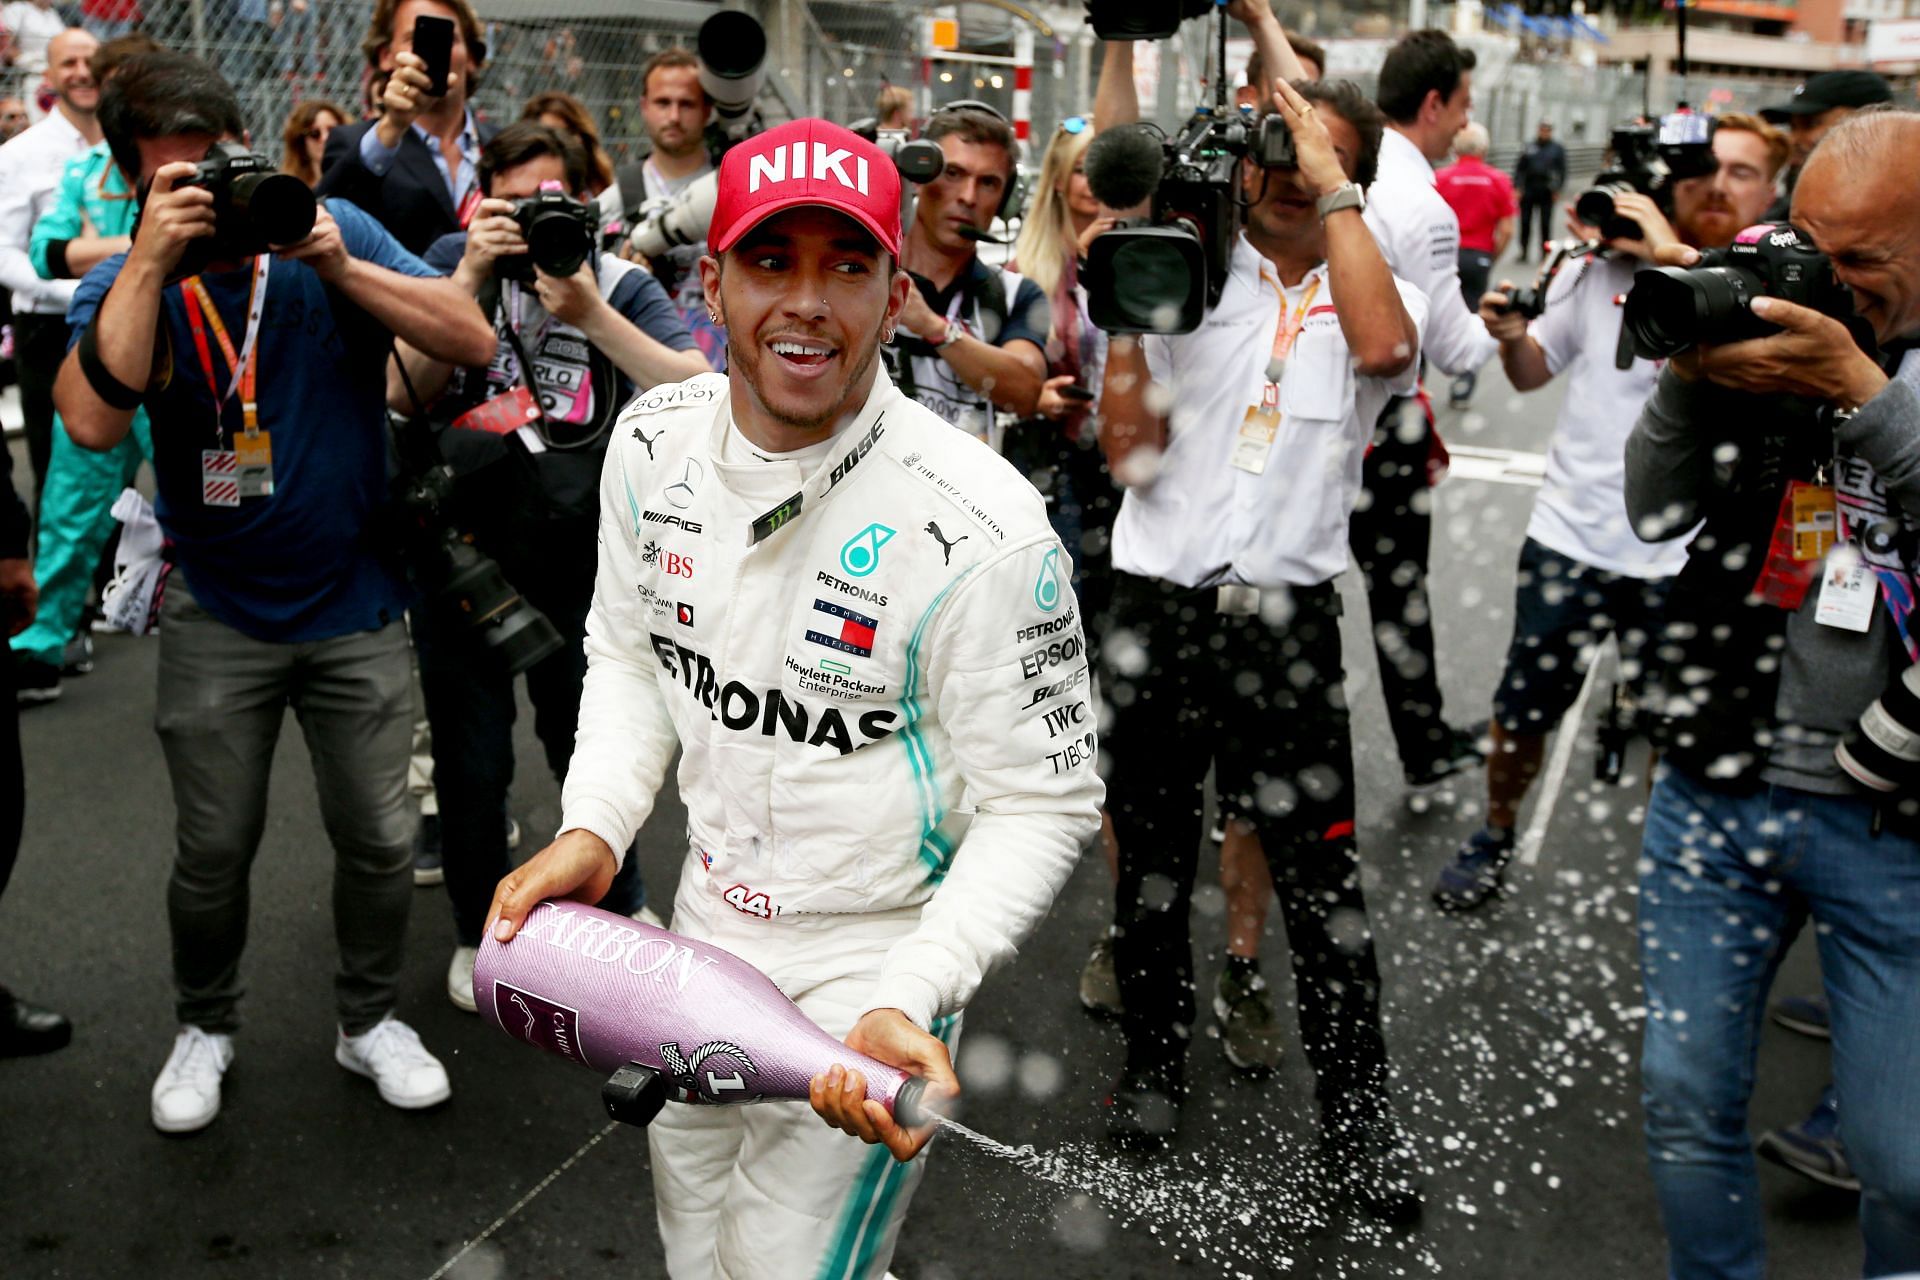 Lewis Hamilton celebrates at the 2019 Monaco Grand Prix. (Photo by Charles Coates/Getty Images)